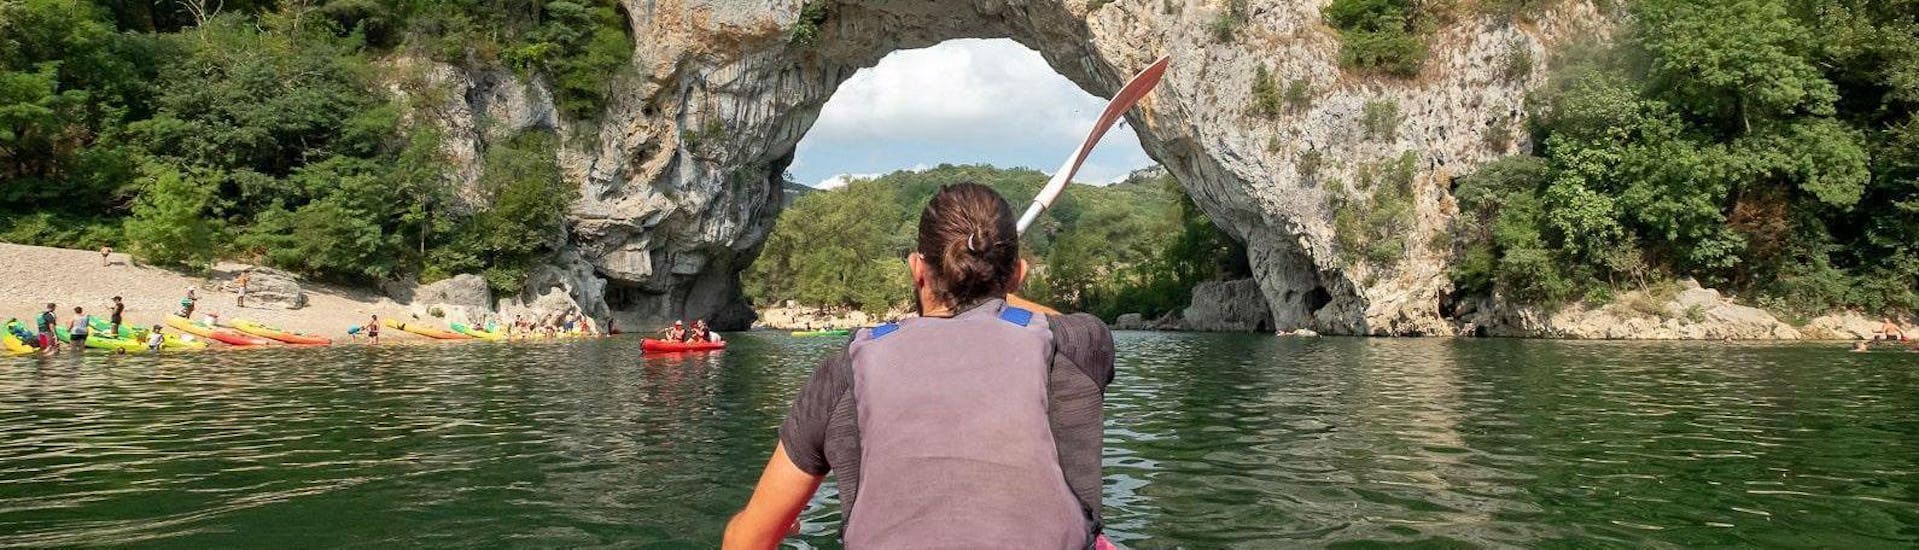 canoe-rental-swim-and-sun-13km-ardeche-aigue-vive-hero